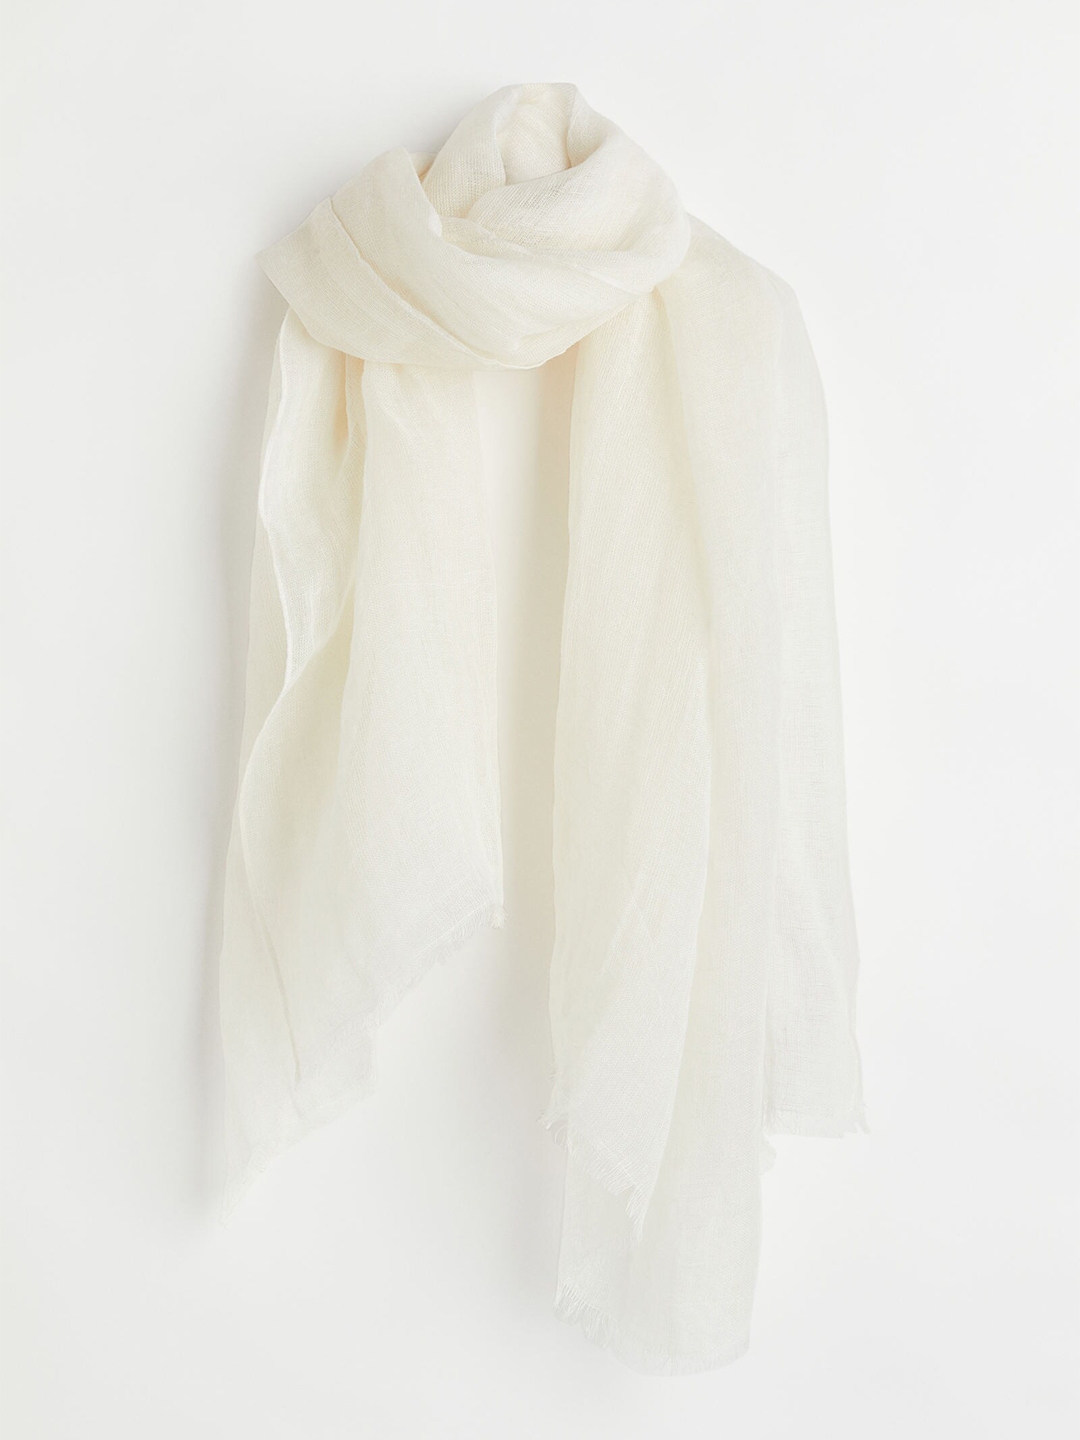 Buy Handm Woman White Linen Scarf Scarves For Women 19694076 Myntra 3855